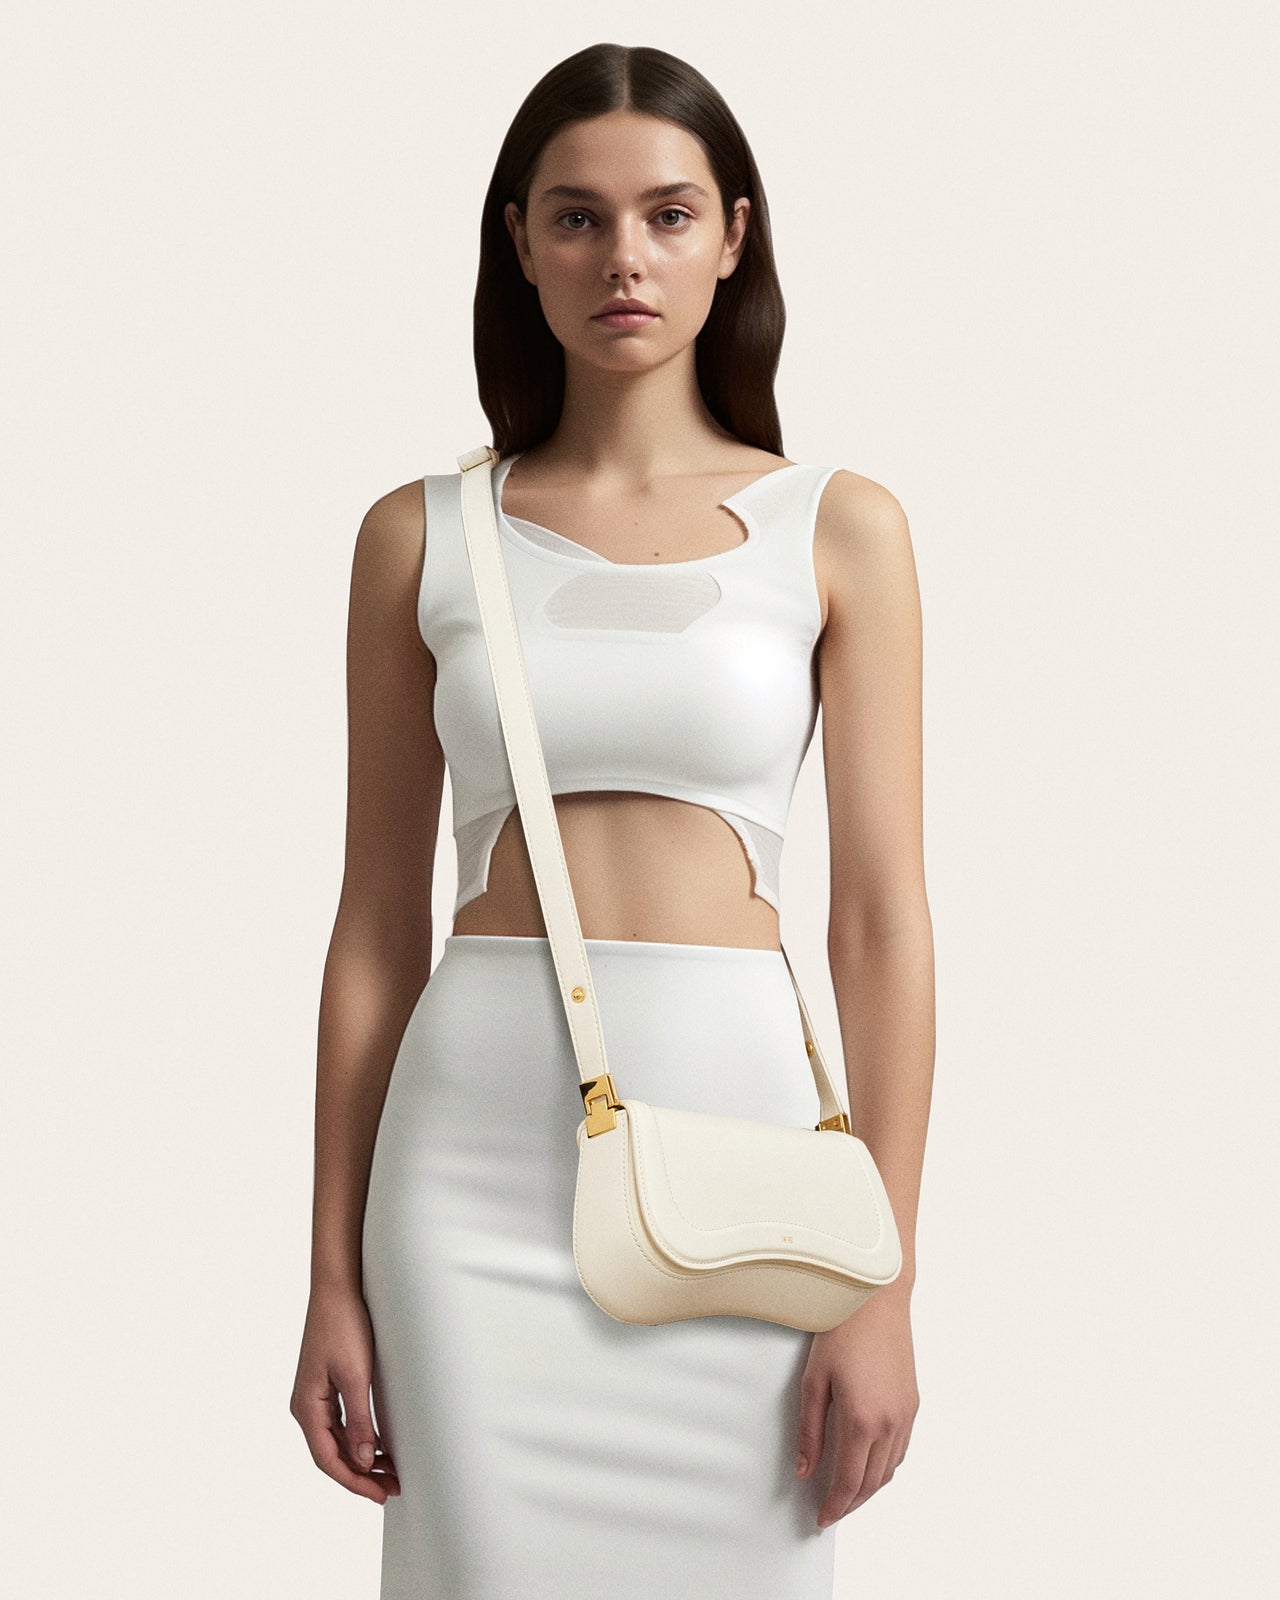 Friday By JW PEI on Instagram: “Eva Shoulder Bag Styled by